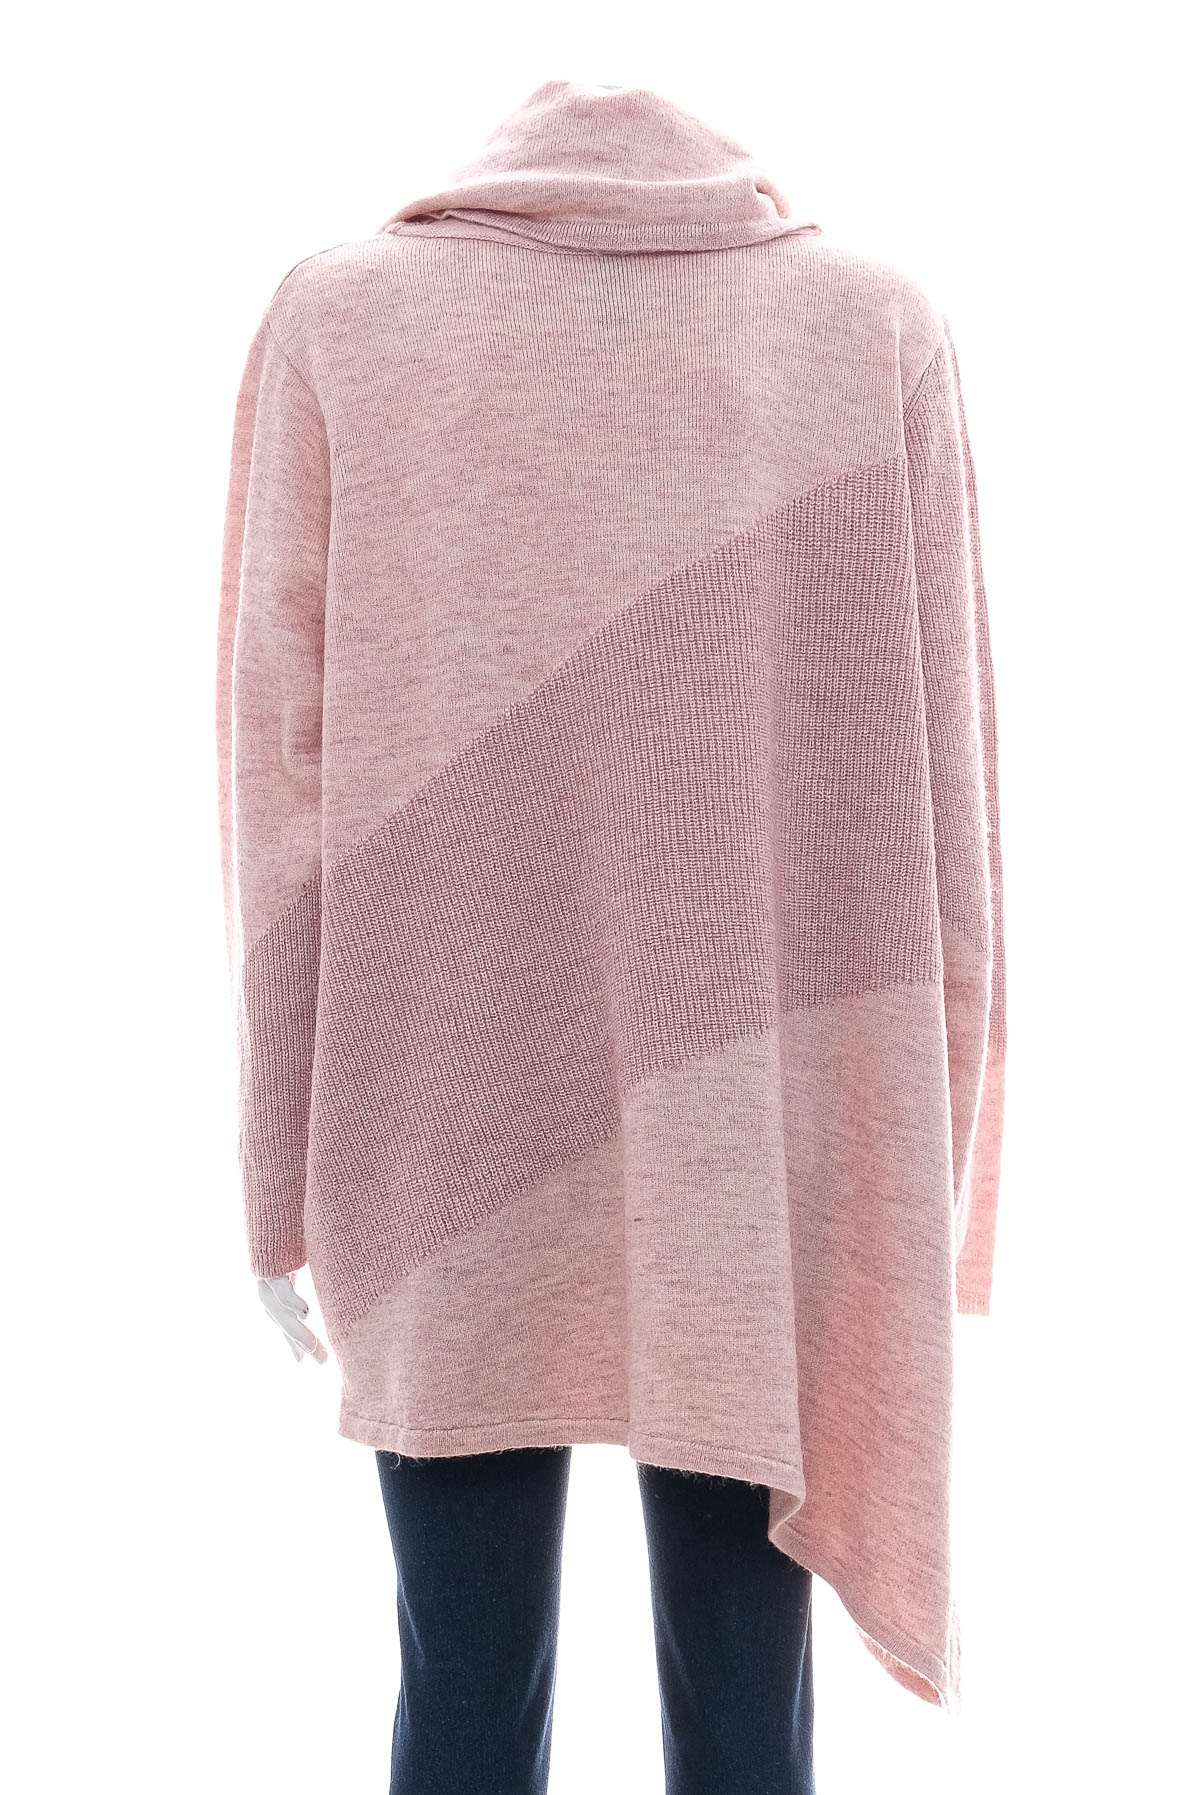 Women's sweater - Tredy - 1